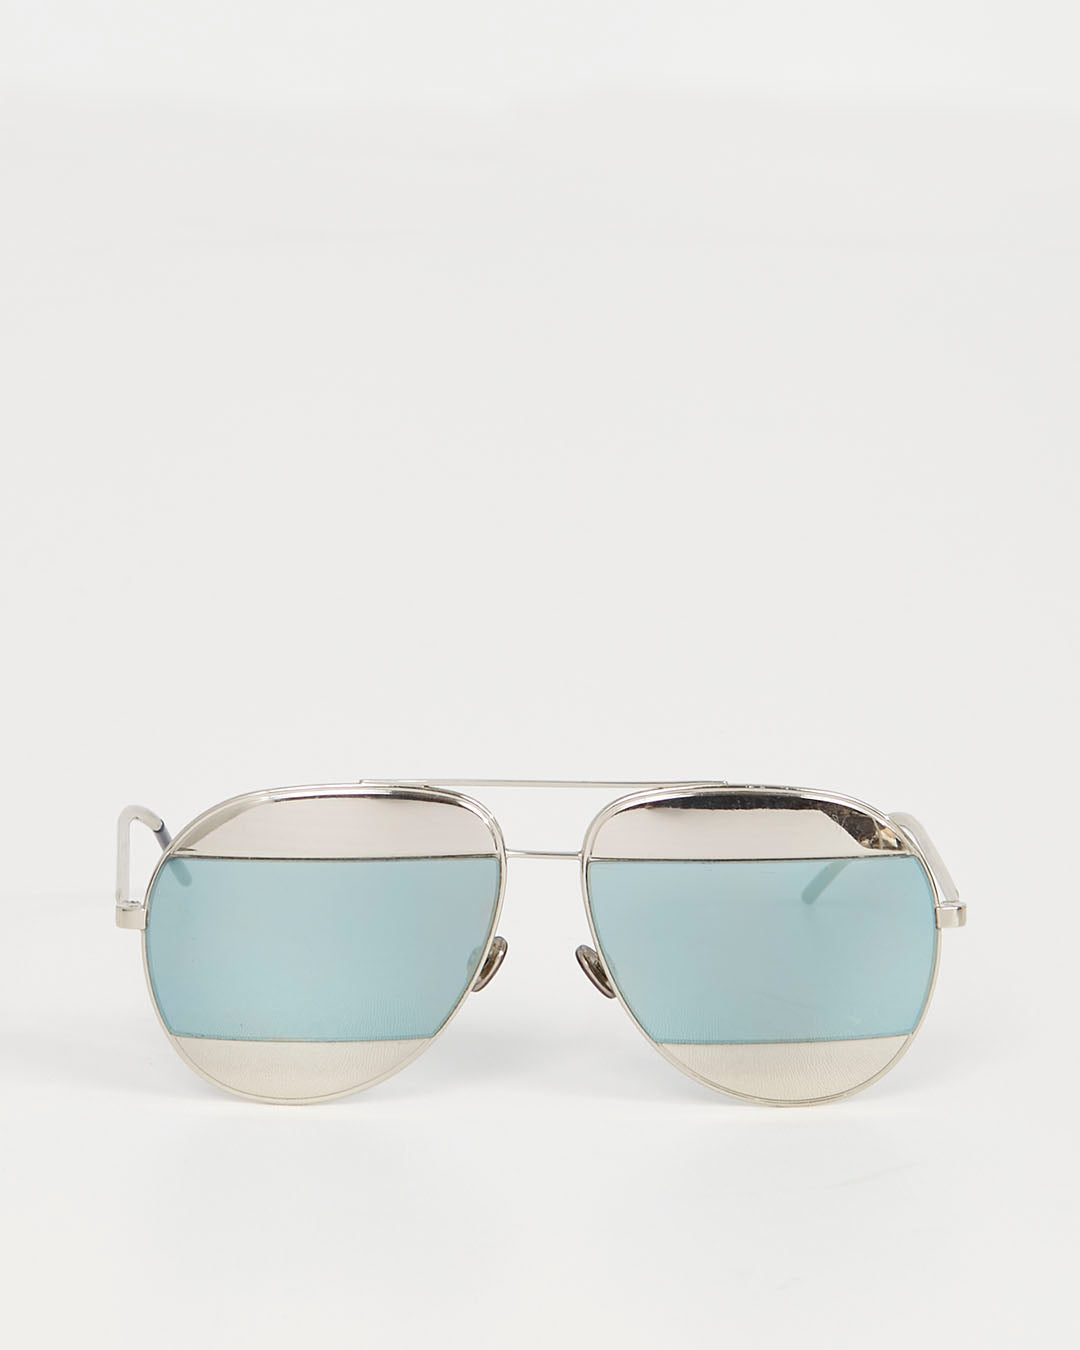 Dior Silver Split Aviator Sunglasses